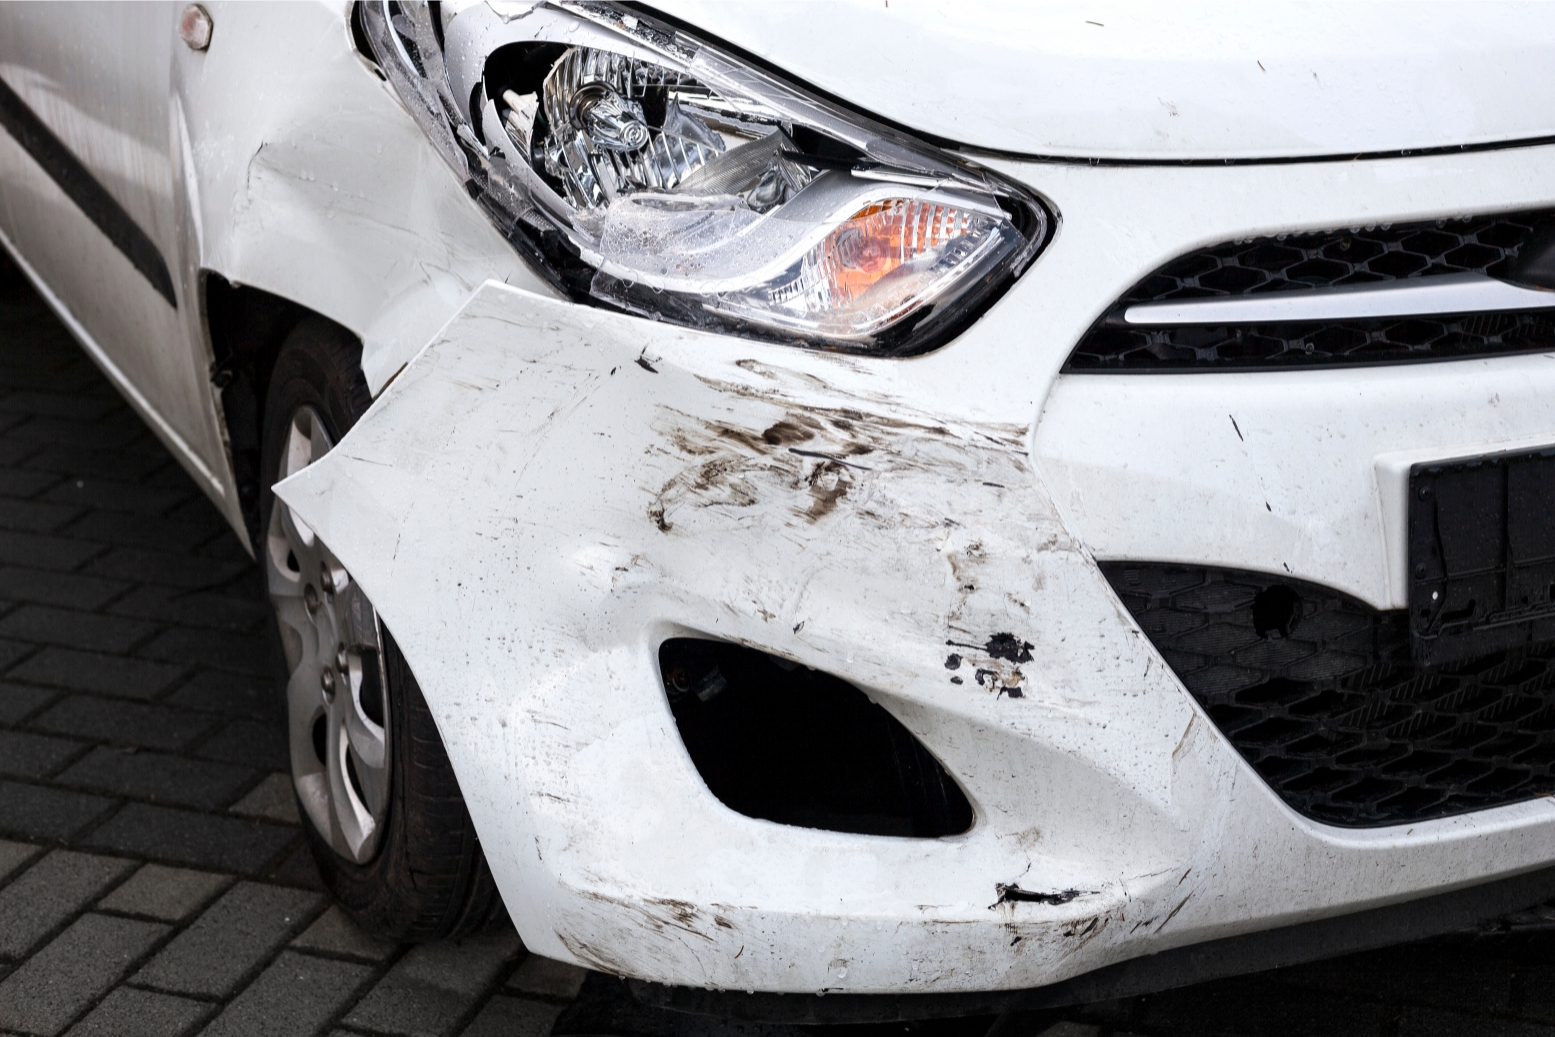 Damaged car bumper